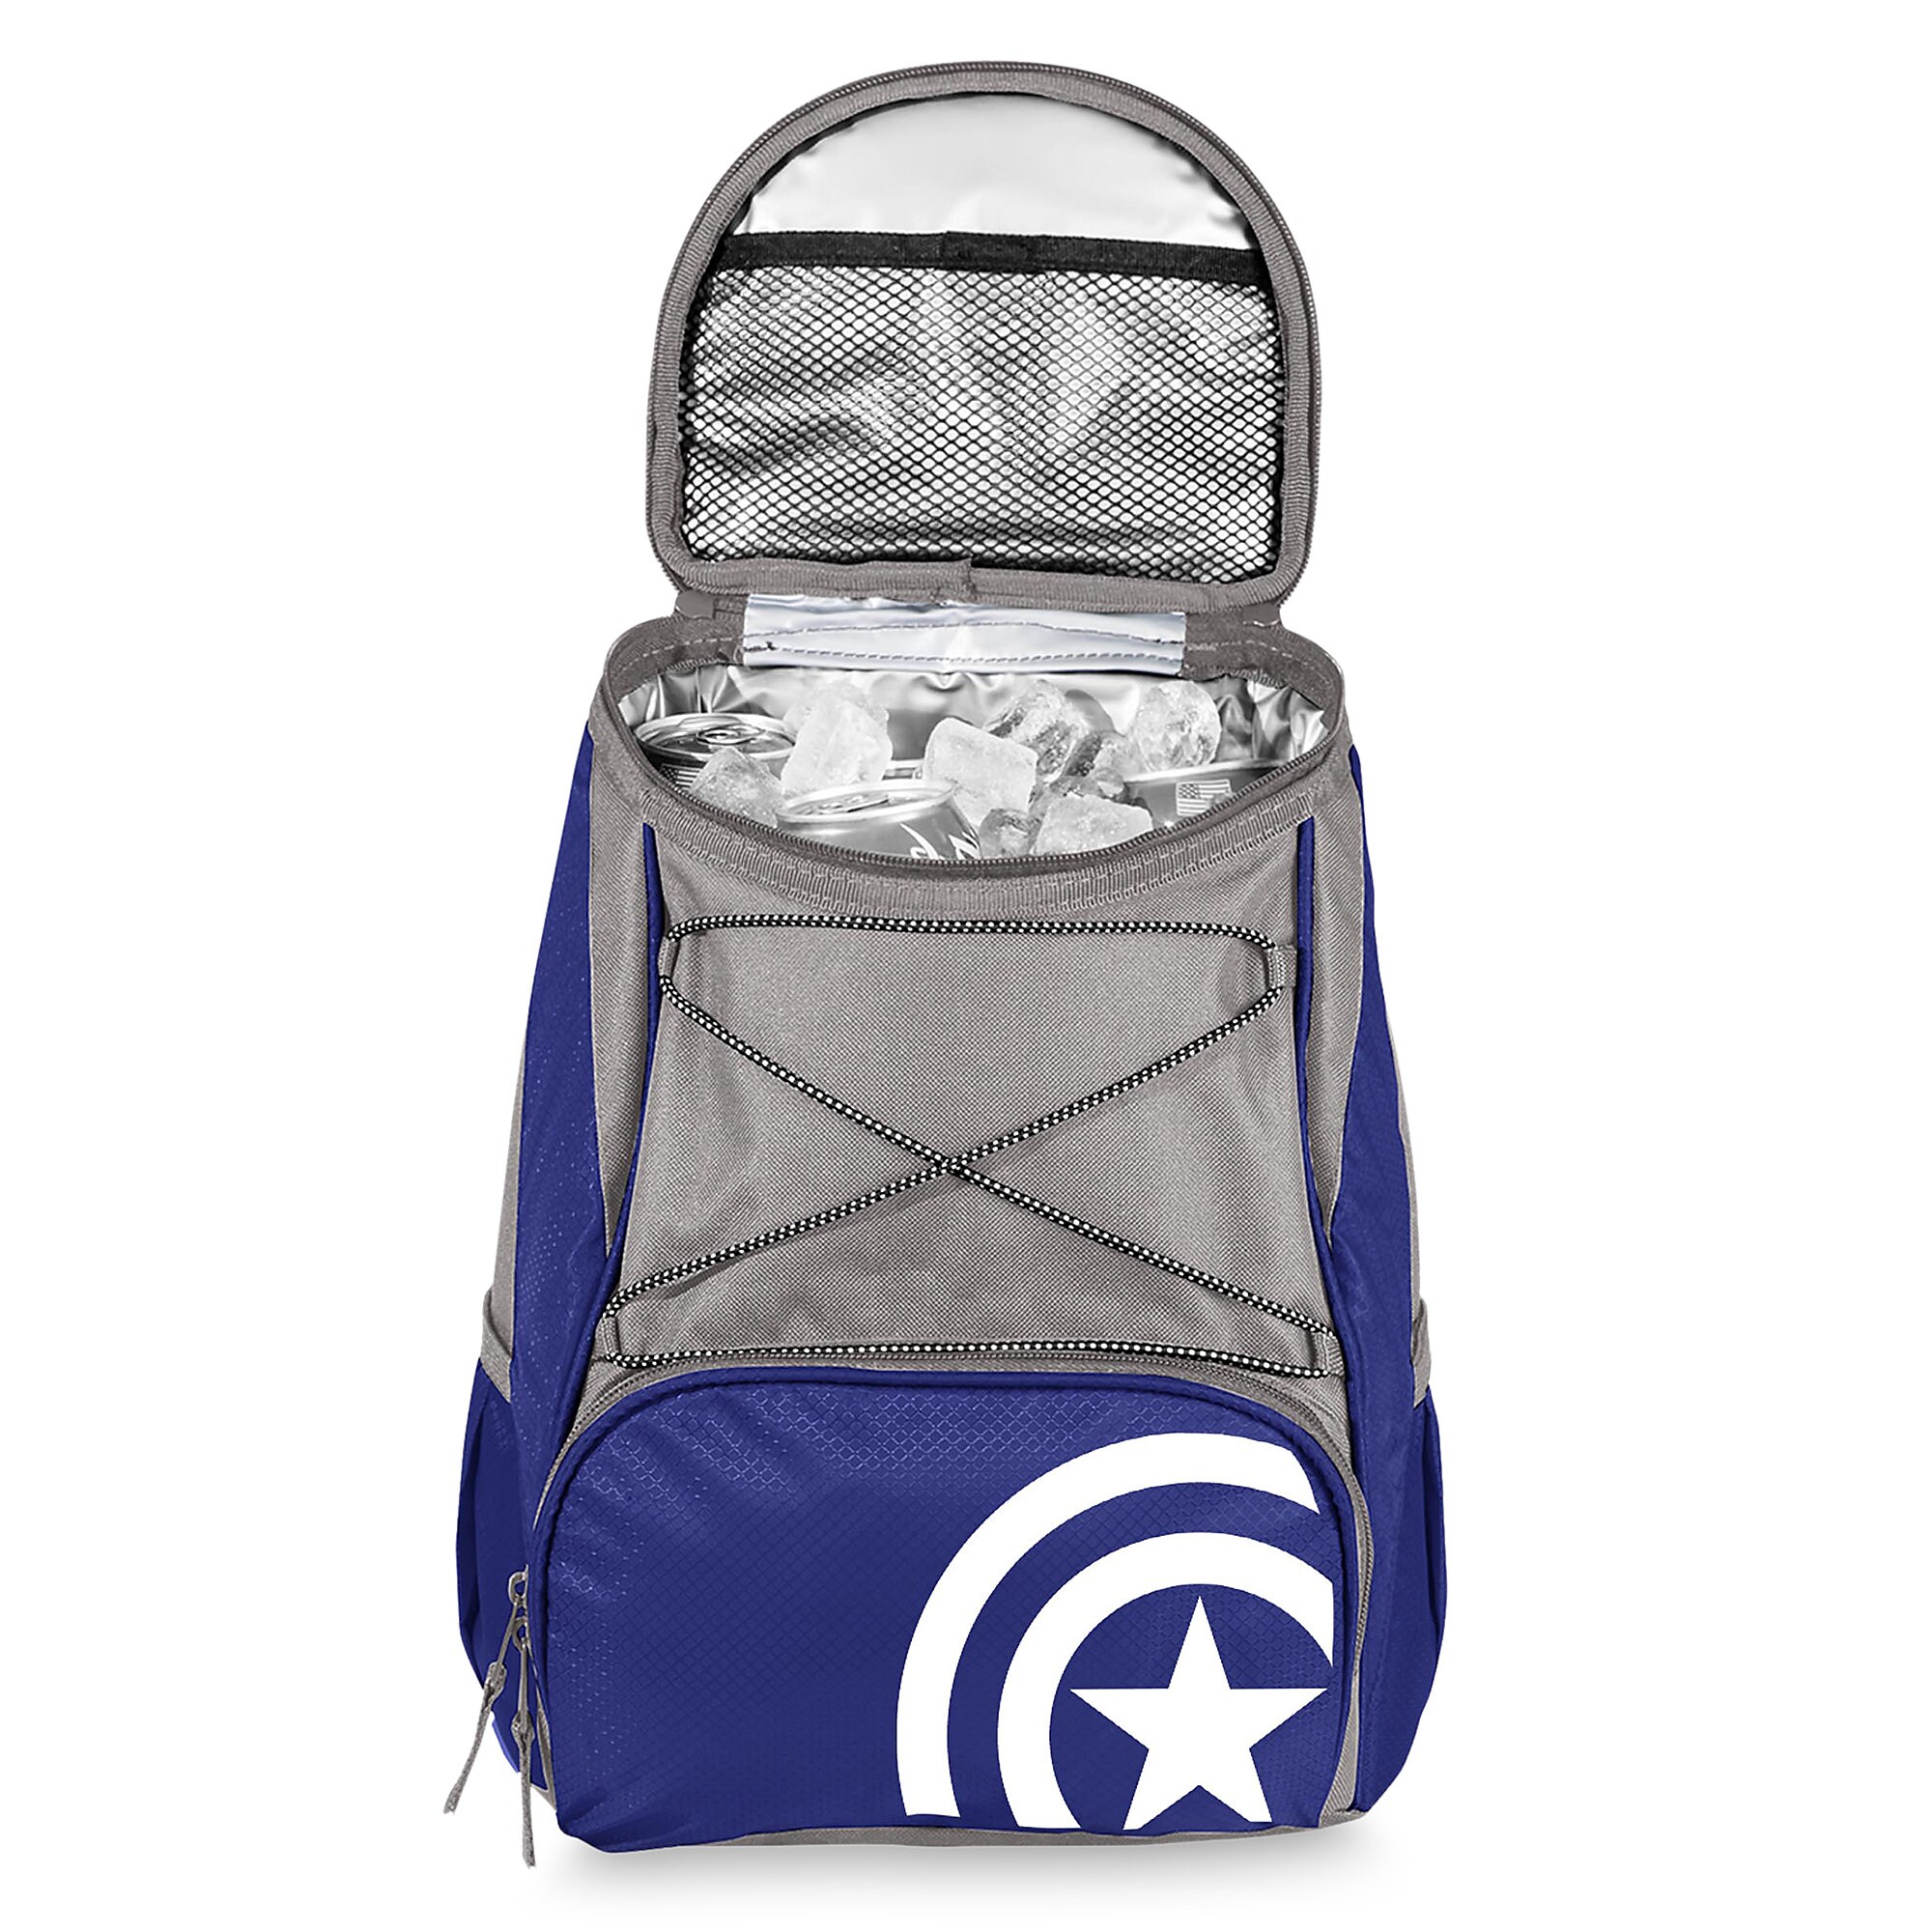 Captain America Cooler Backpack